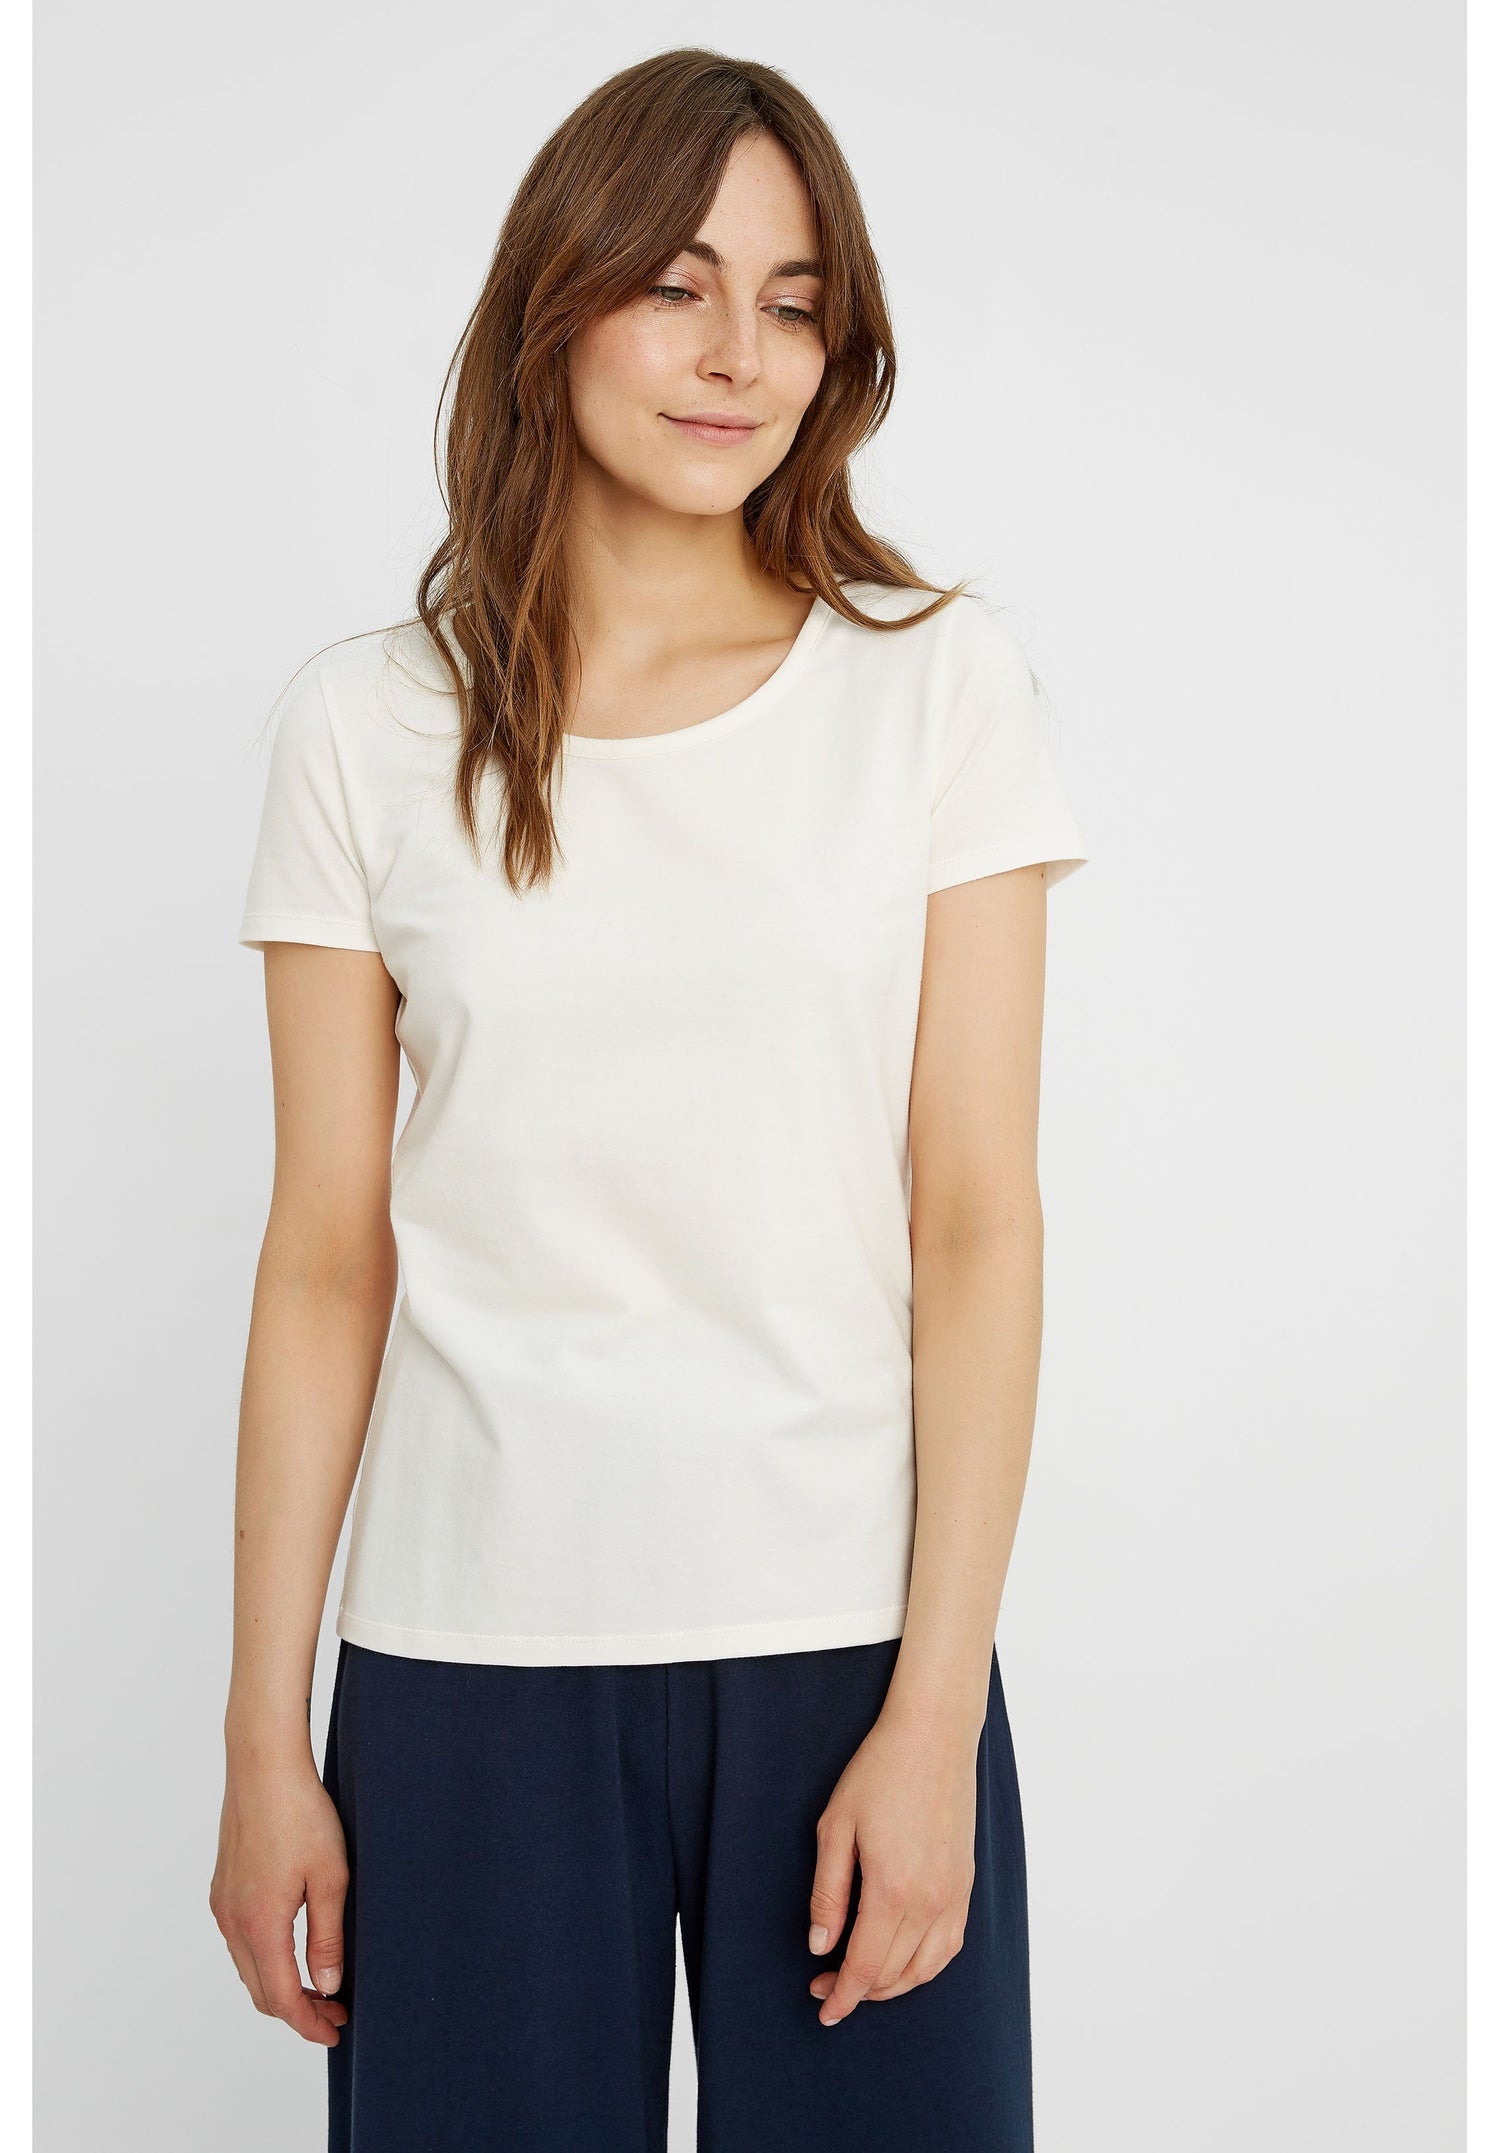 People Tree W's Gaia Tee - Organic Cotton White Shirt